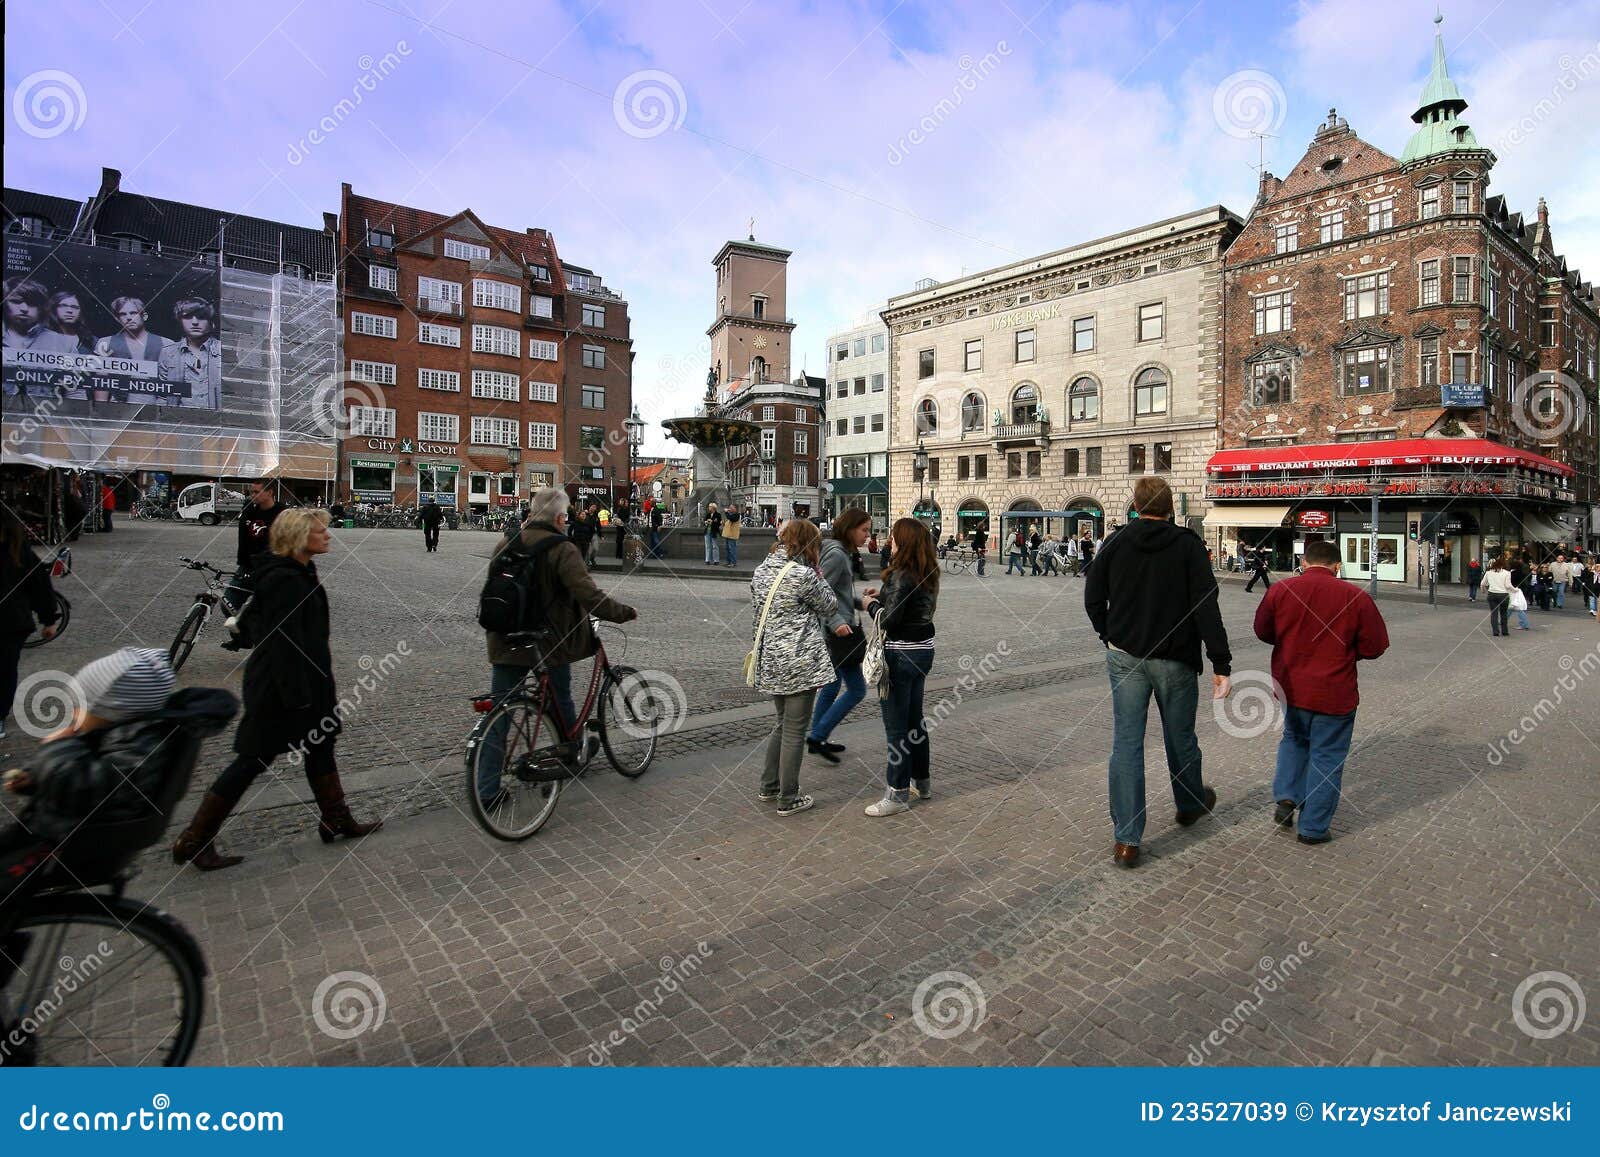 Copenhagen street. editorial stock image. Image of human - 23527039